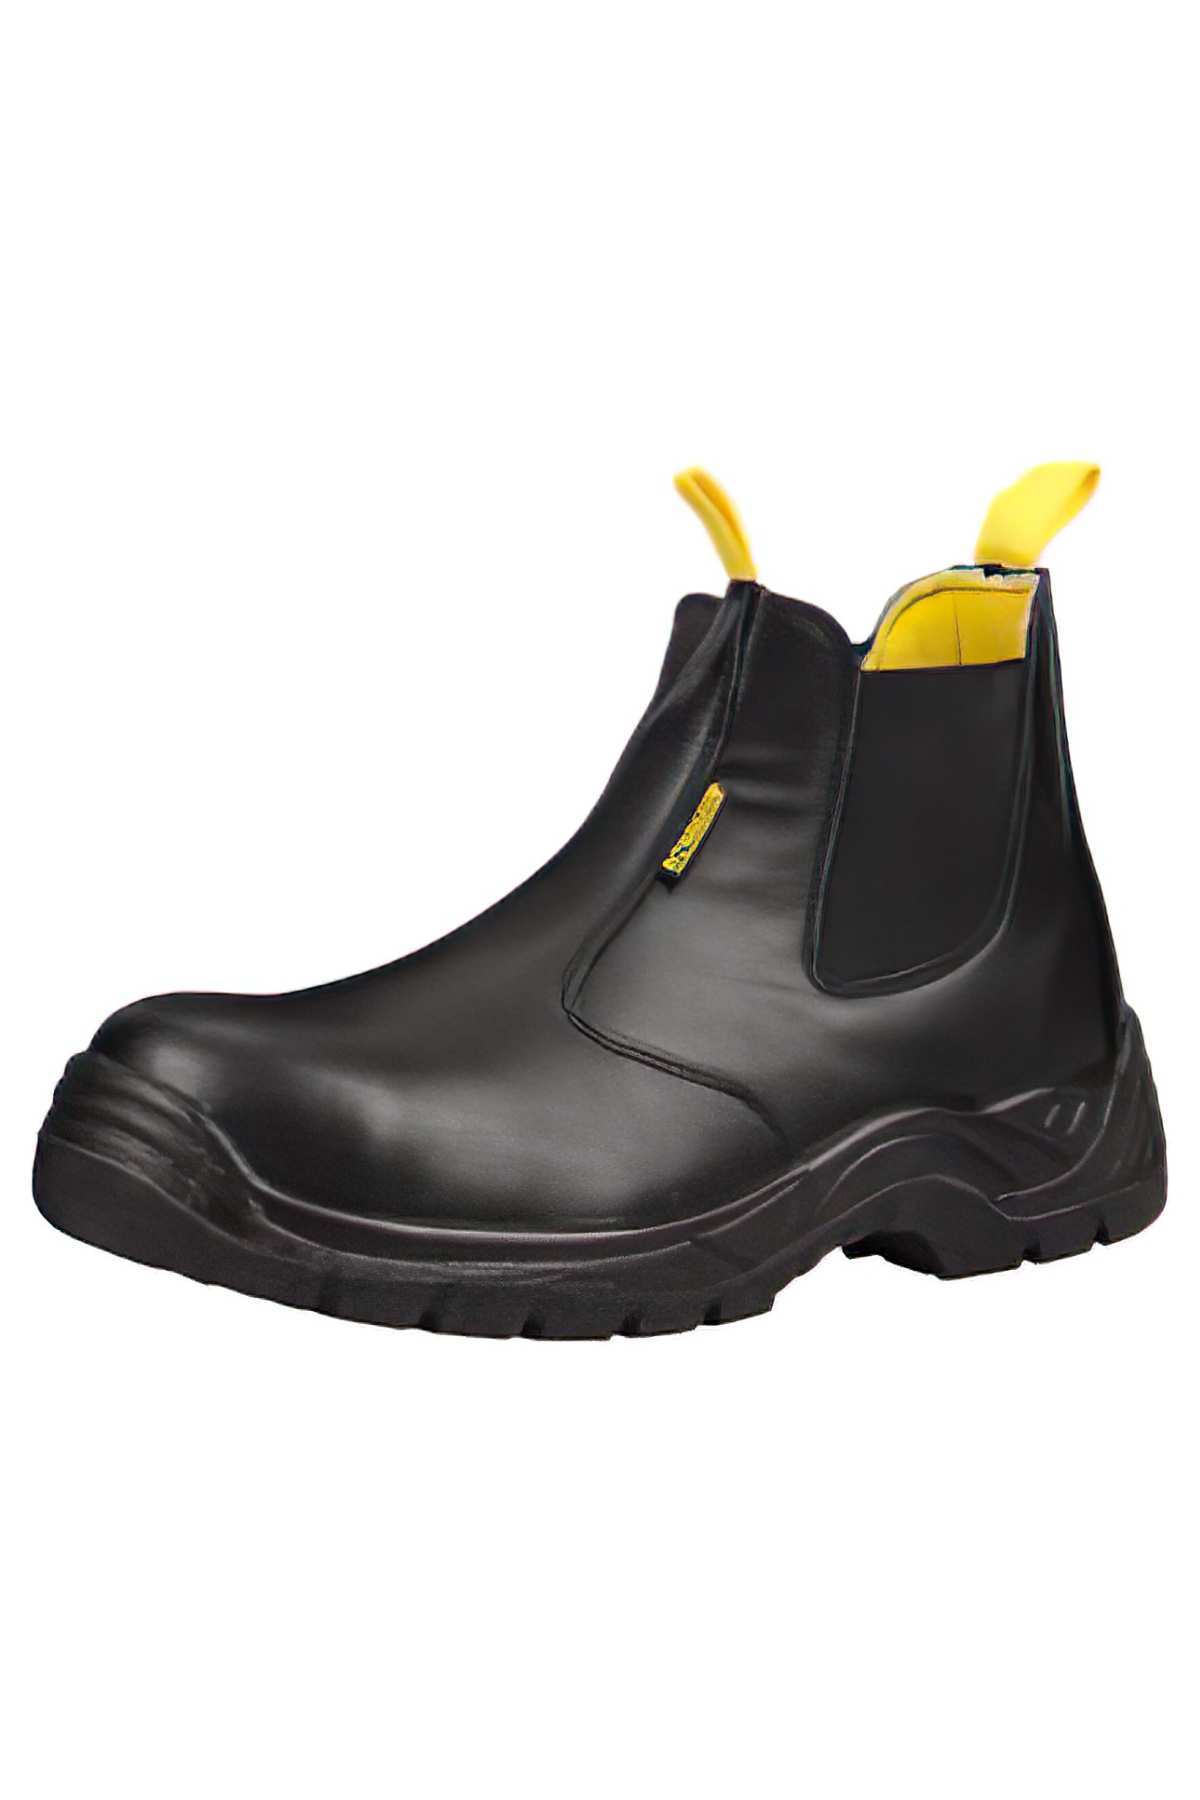 RTRMAX RHS2846 Güvenlik Ayakkabısı